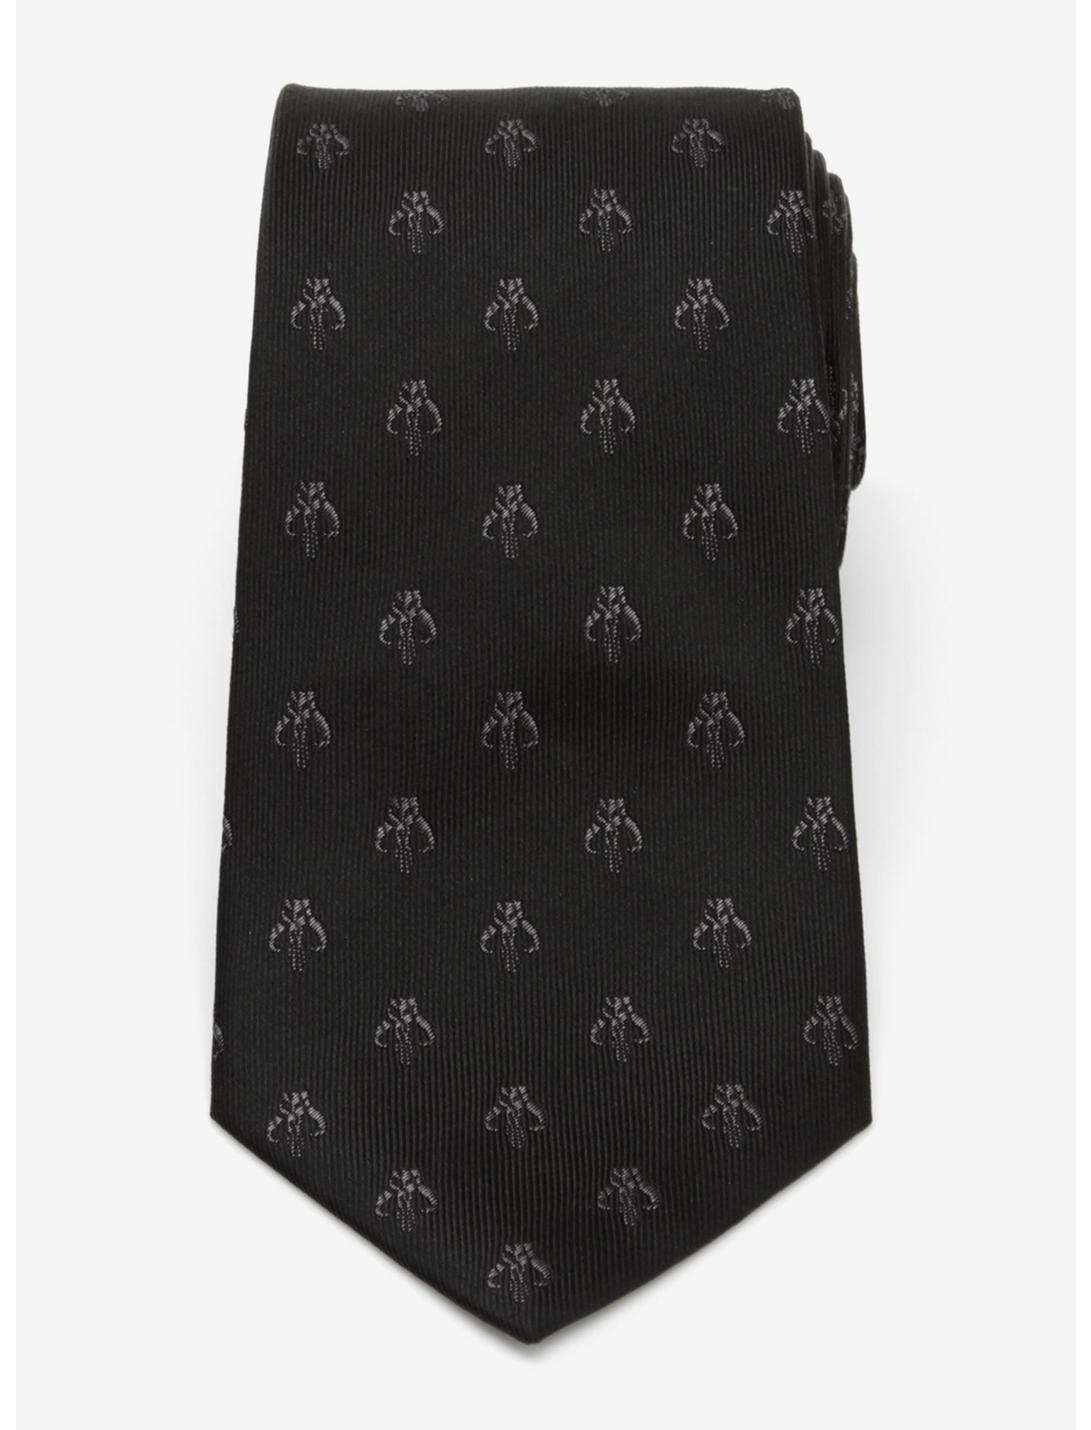 Star Wars Mandalorian Black Silk Tie, , hi-res